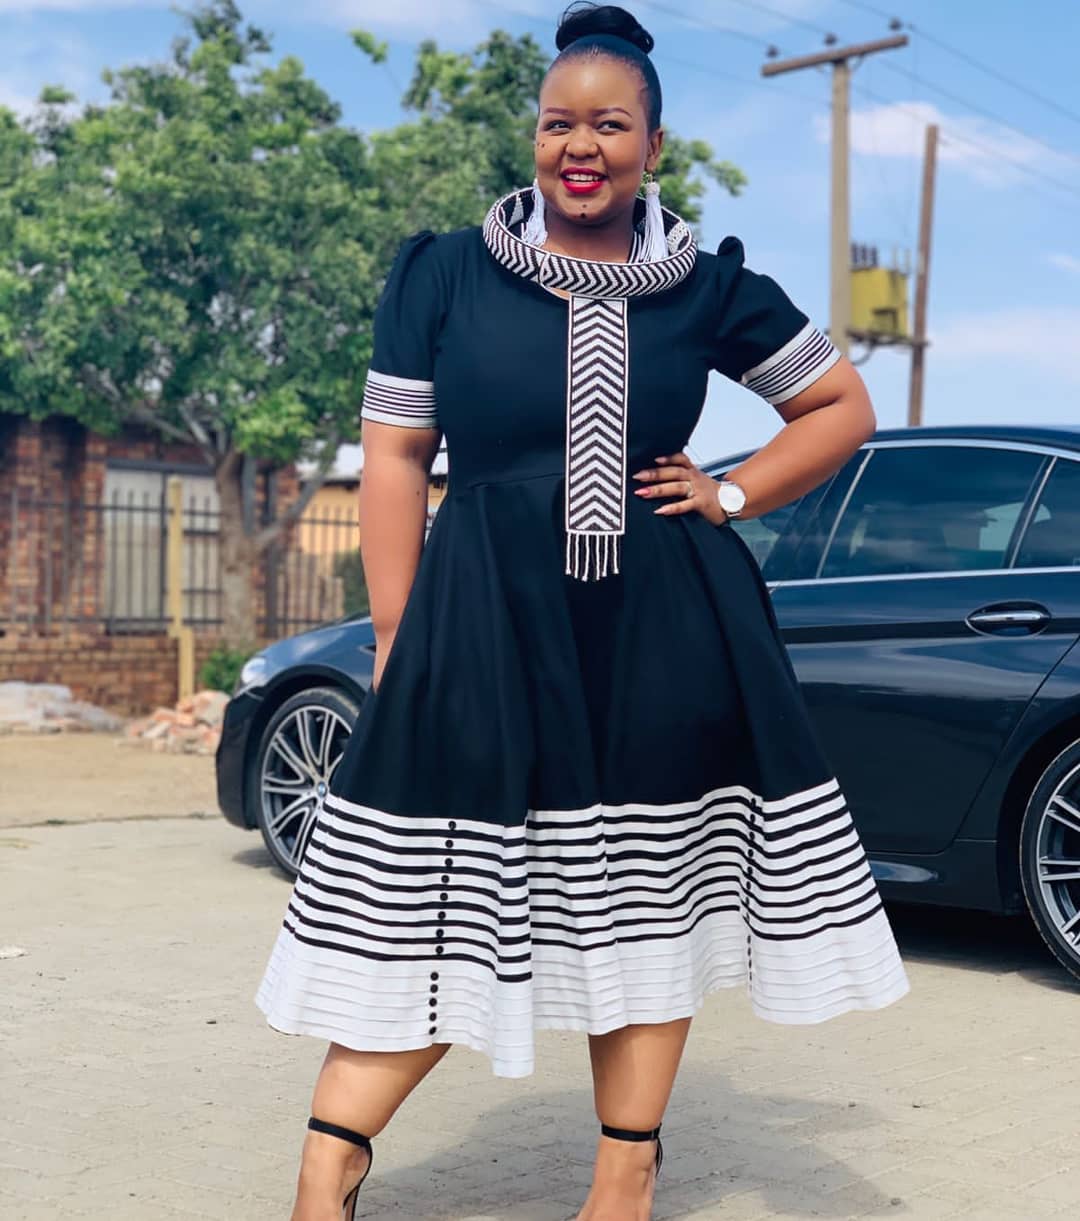 Clipkulture Xhosa Traditional Dress Designs, The Last Is Quite ...